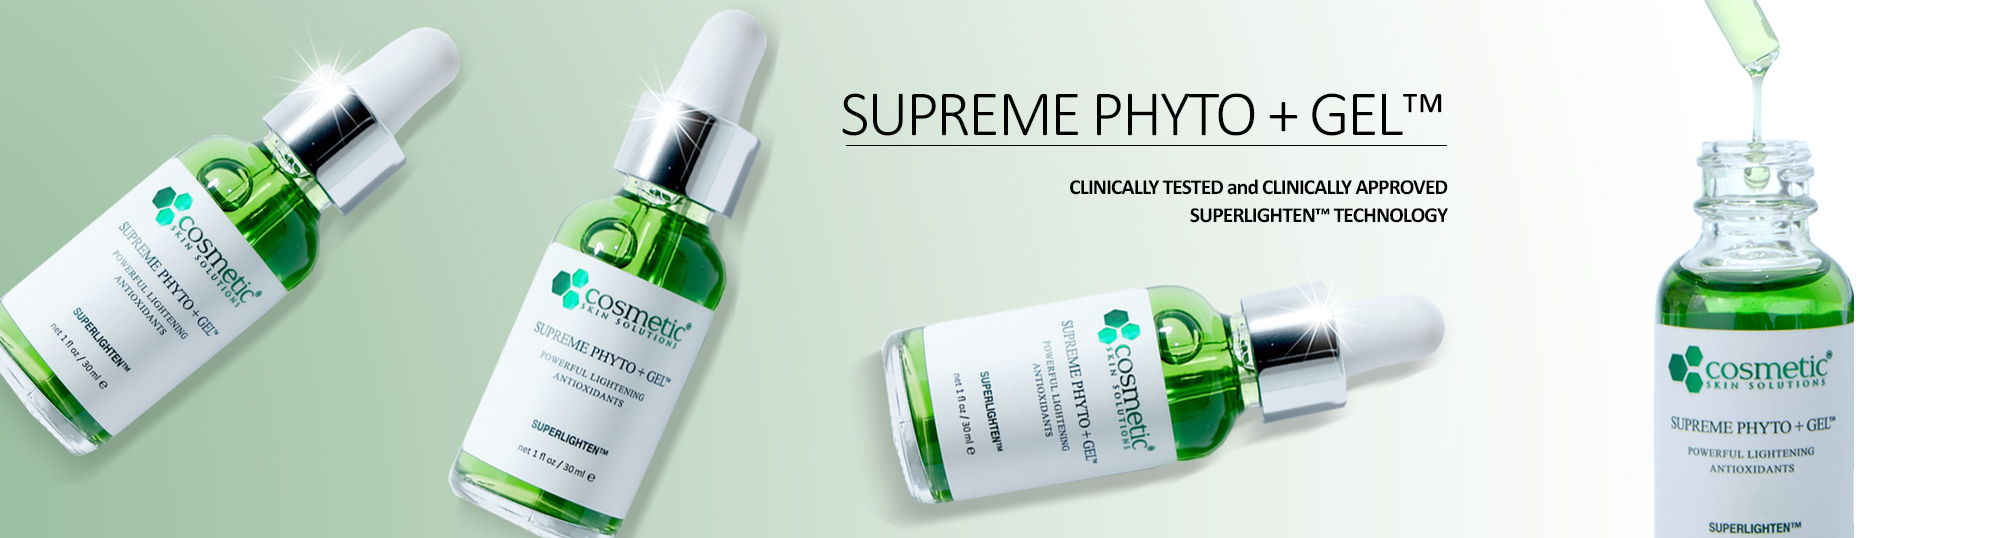 Supreme Phyto + Gel